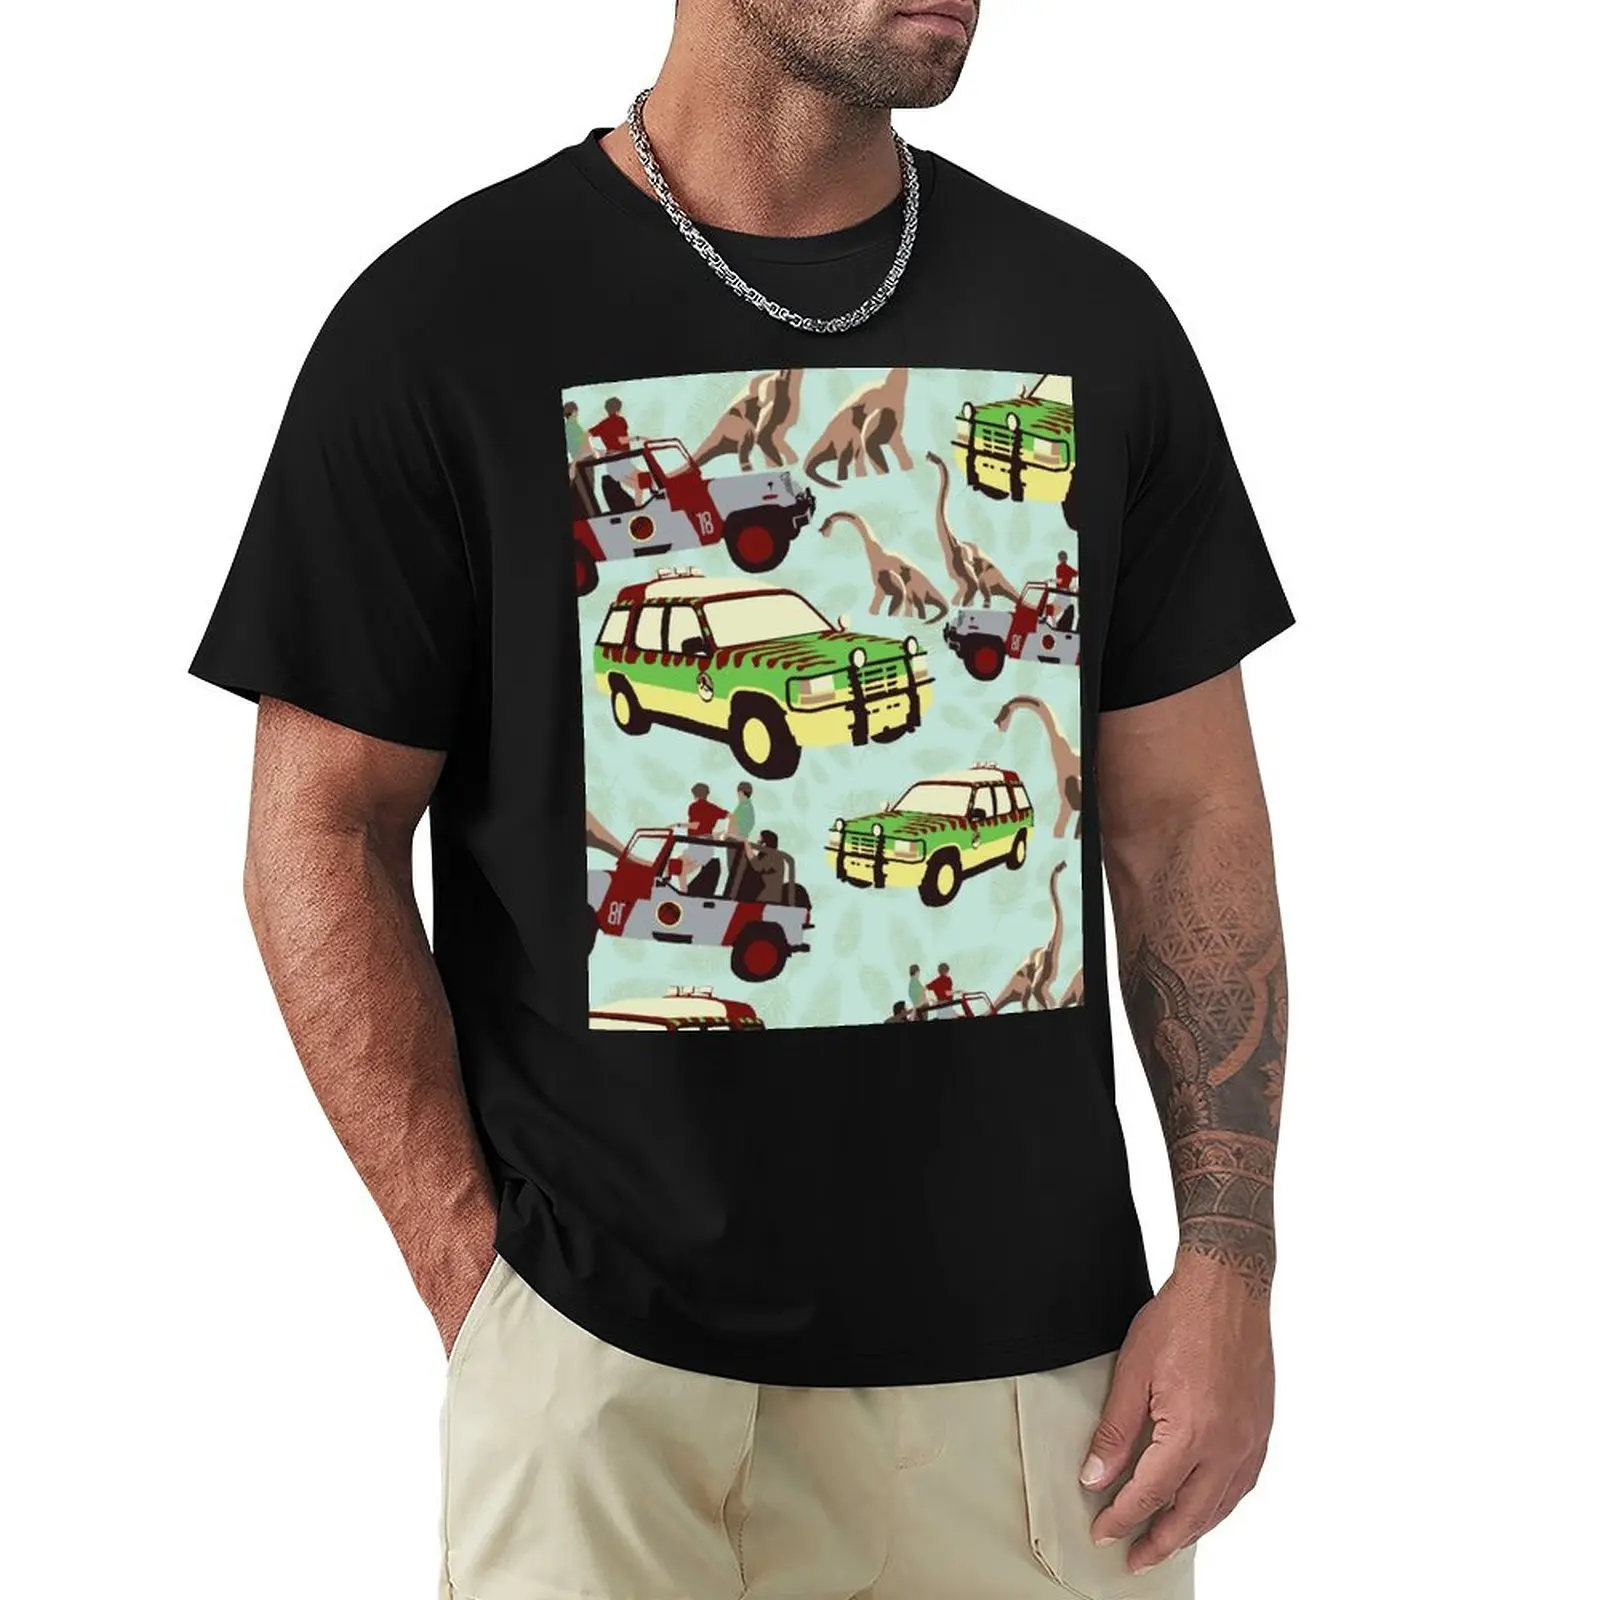 

Jurassic Ride T-Shirt oversized t shirt quick drying shirt graphic t shirts plain white t shirts men